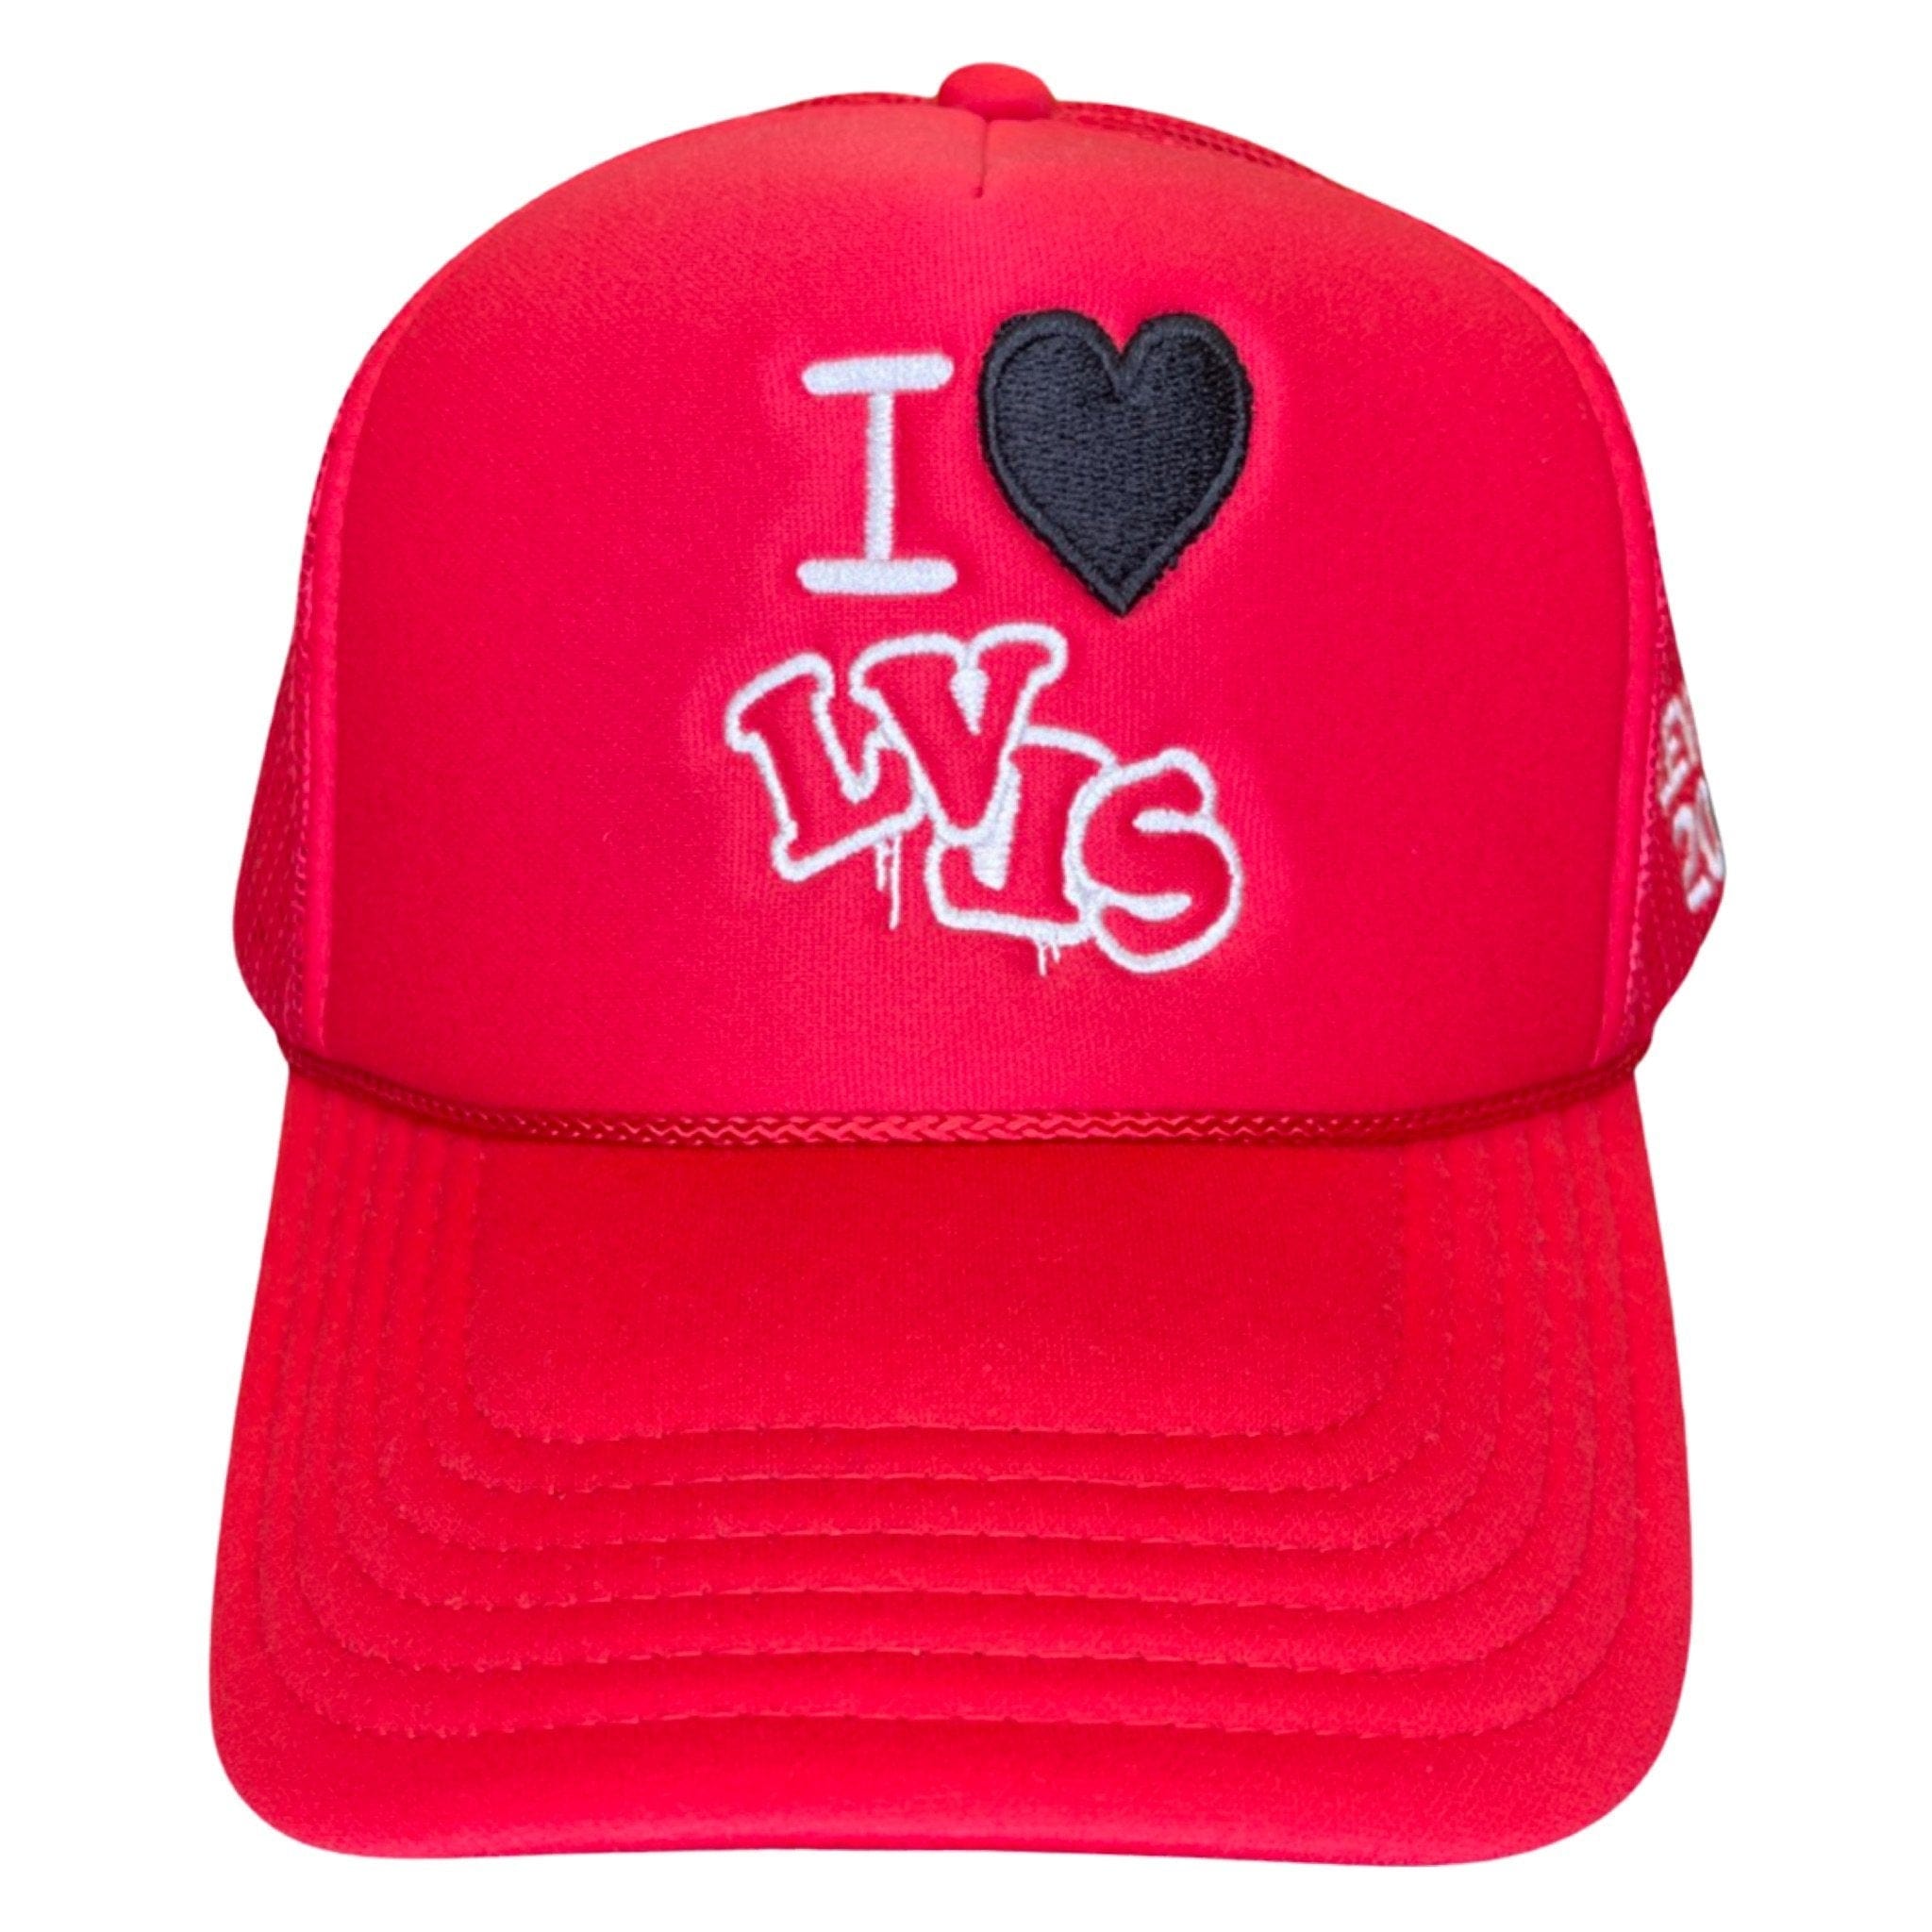 LVLS House of Hoodies, LLC Hats Trucker LVLS Trucker Hat (Red)